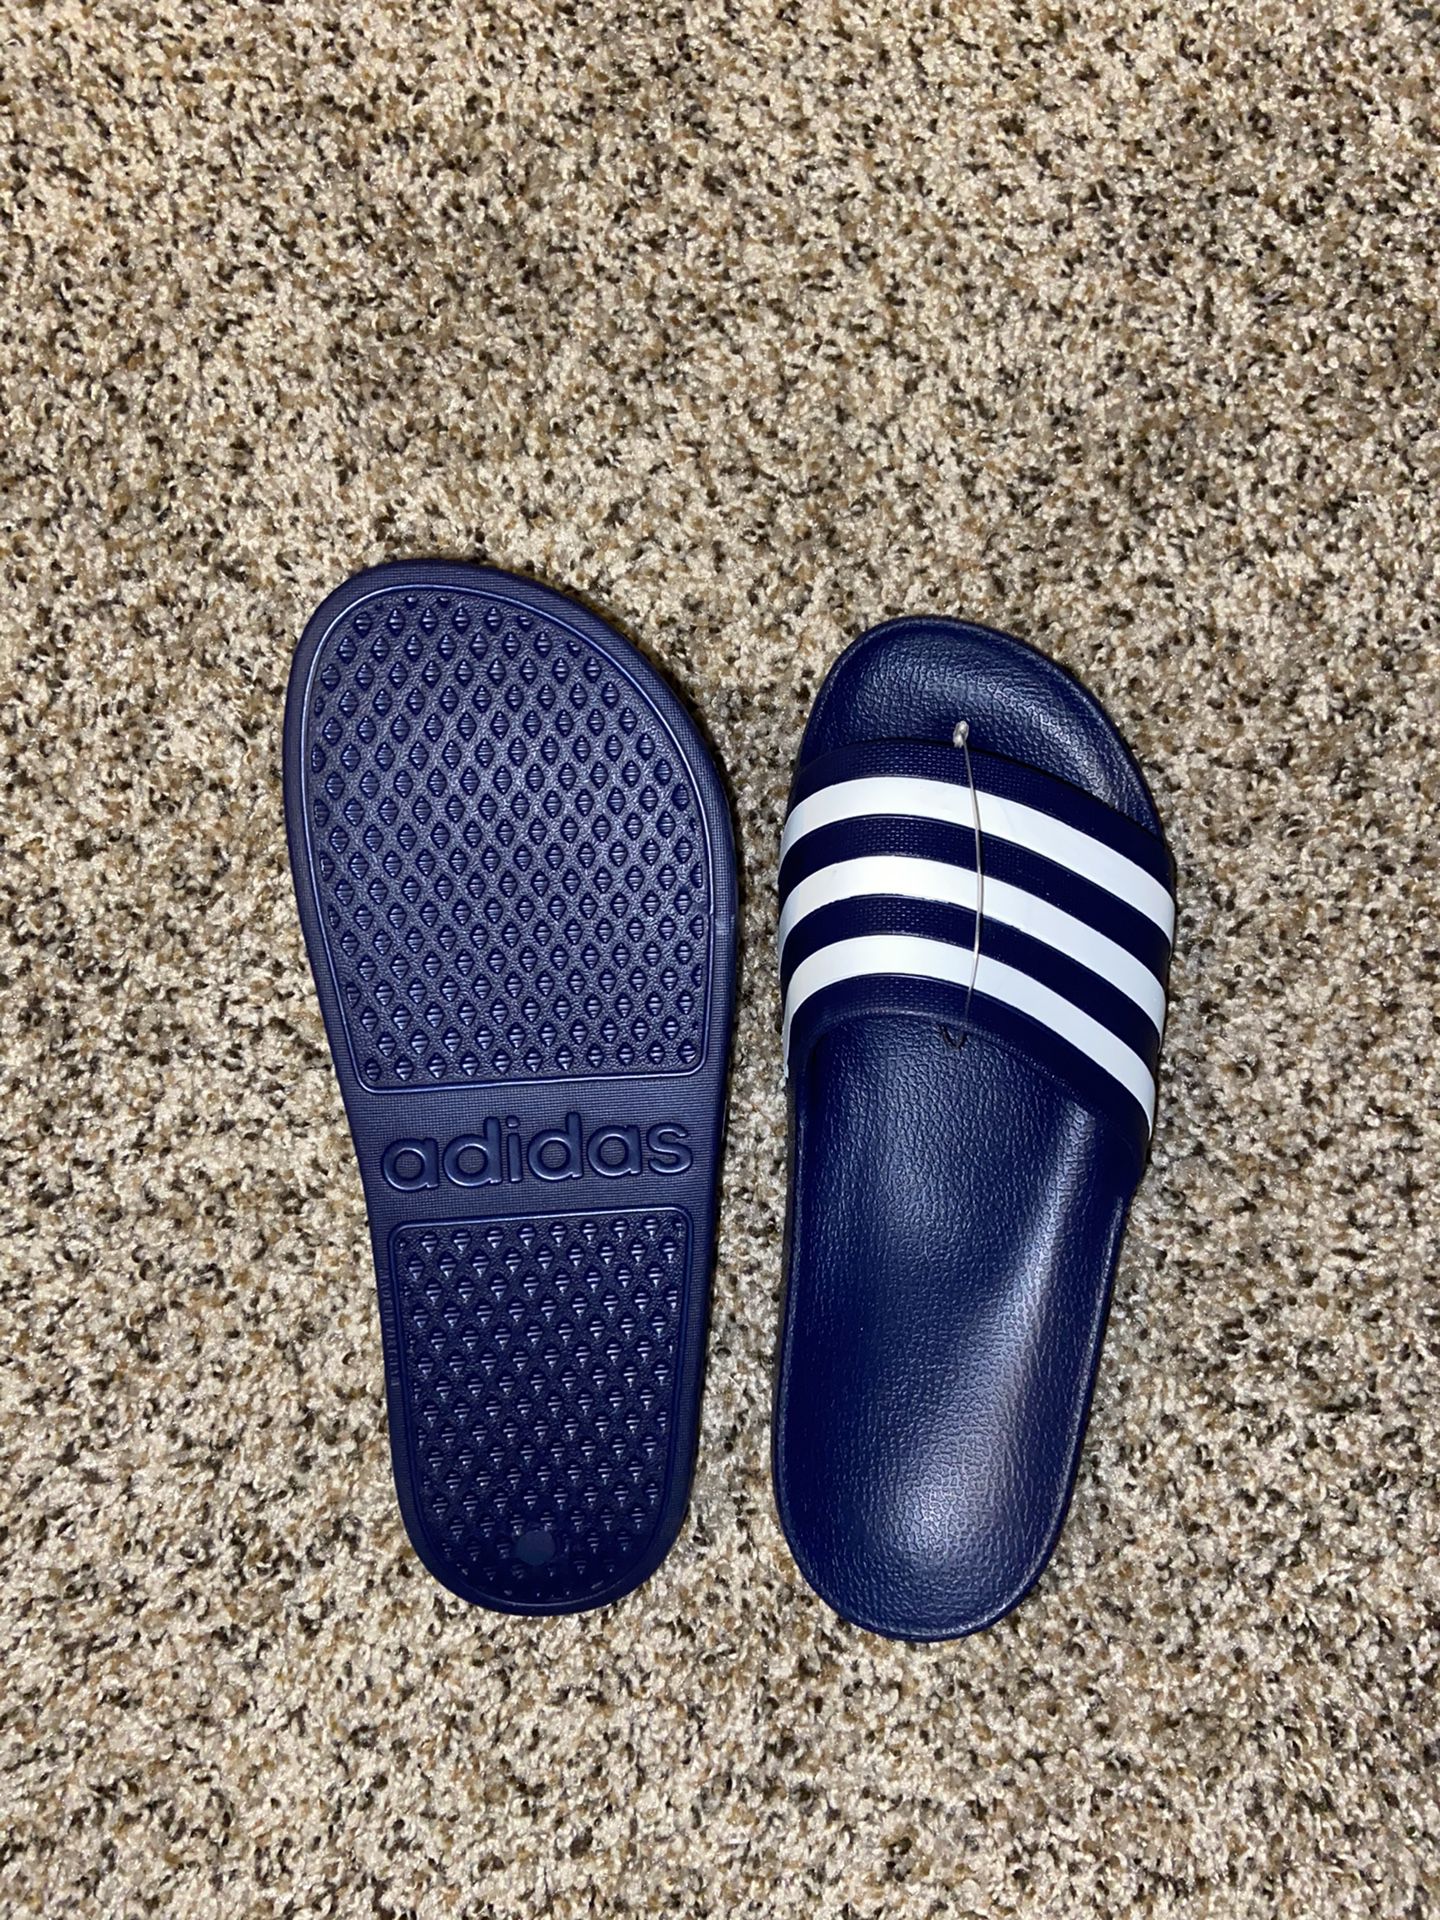 Adidas slides